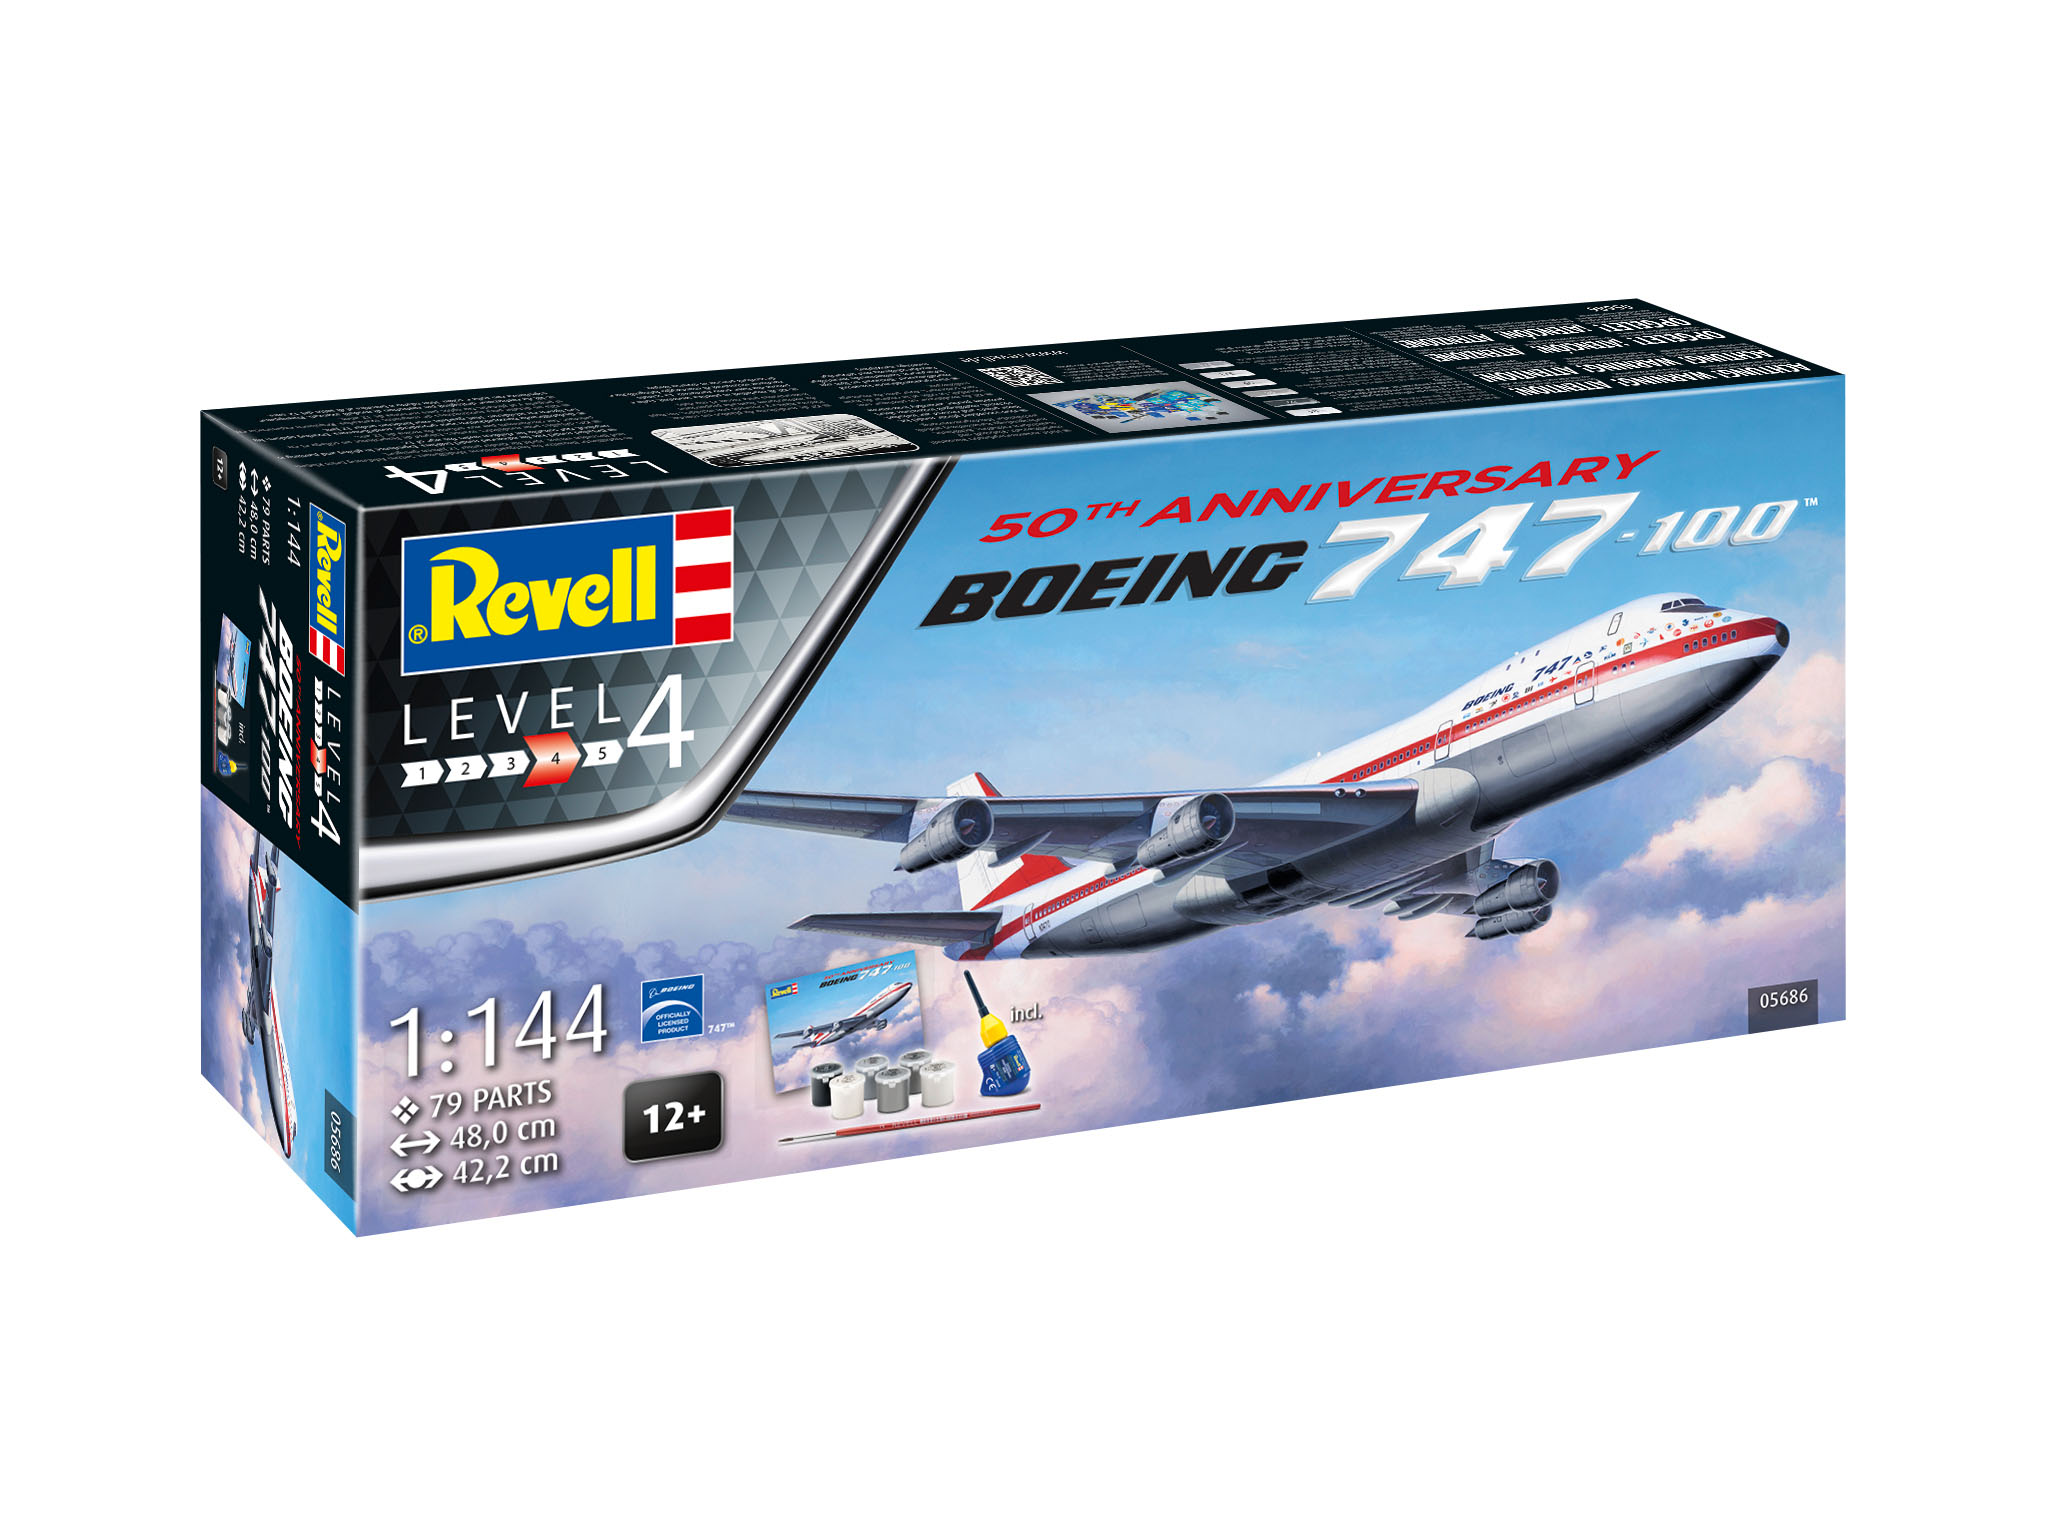 1/144 Gift Set Boeing 747-100, 50th Anniversary